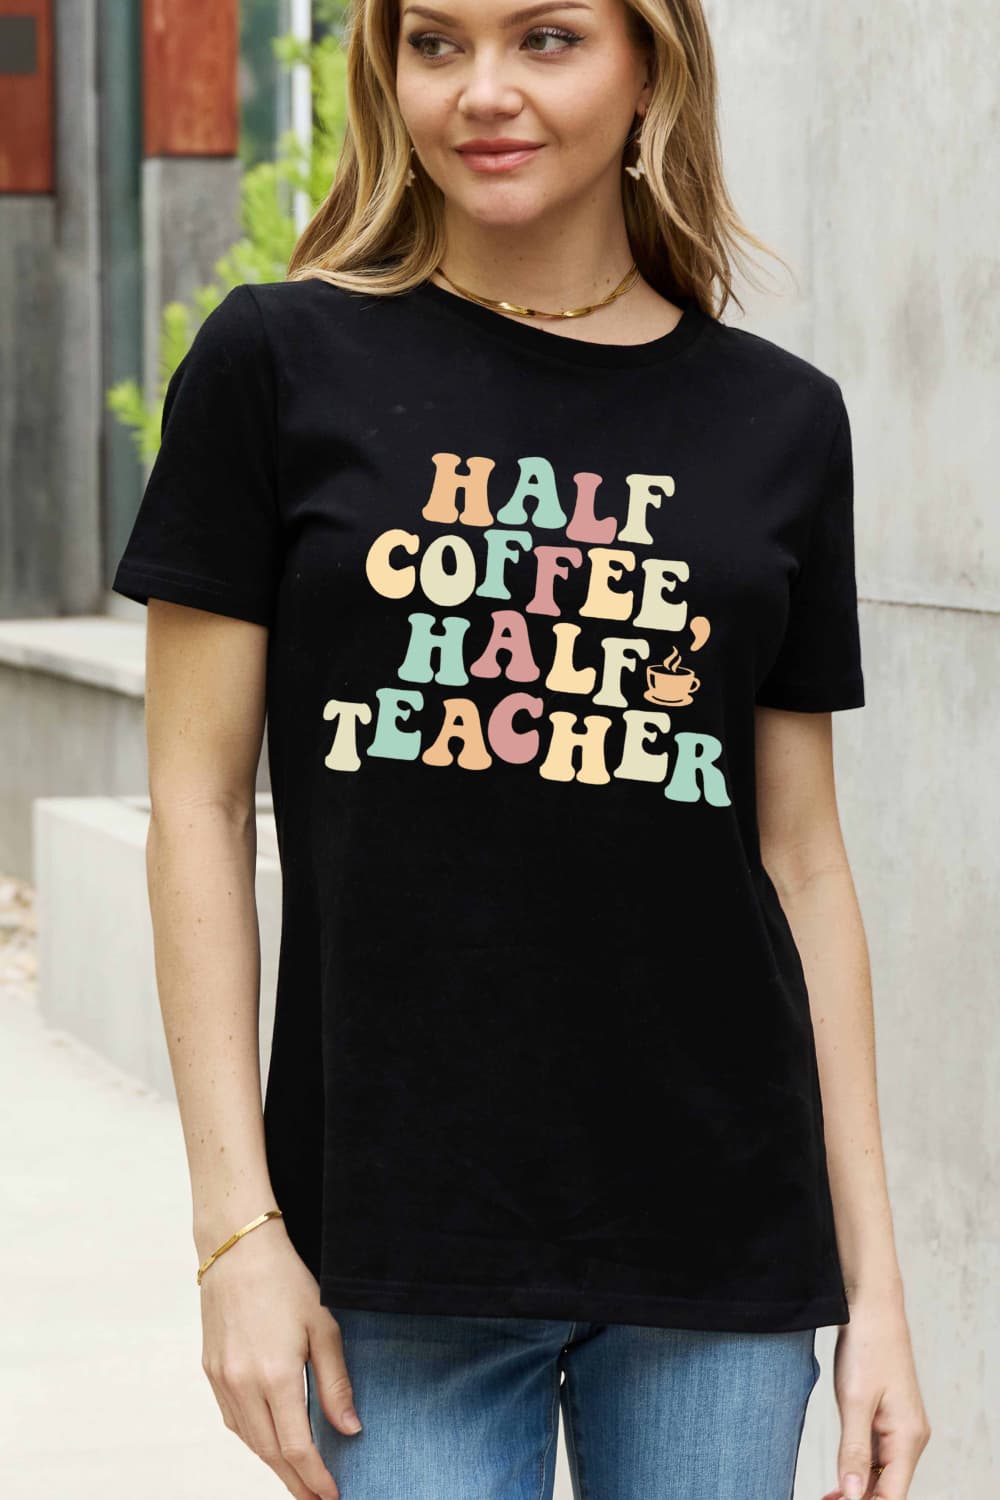 Full Size HALF COFFEE HALF TEACHER Graphic Cotton Tee